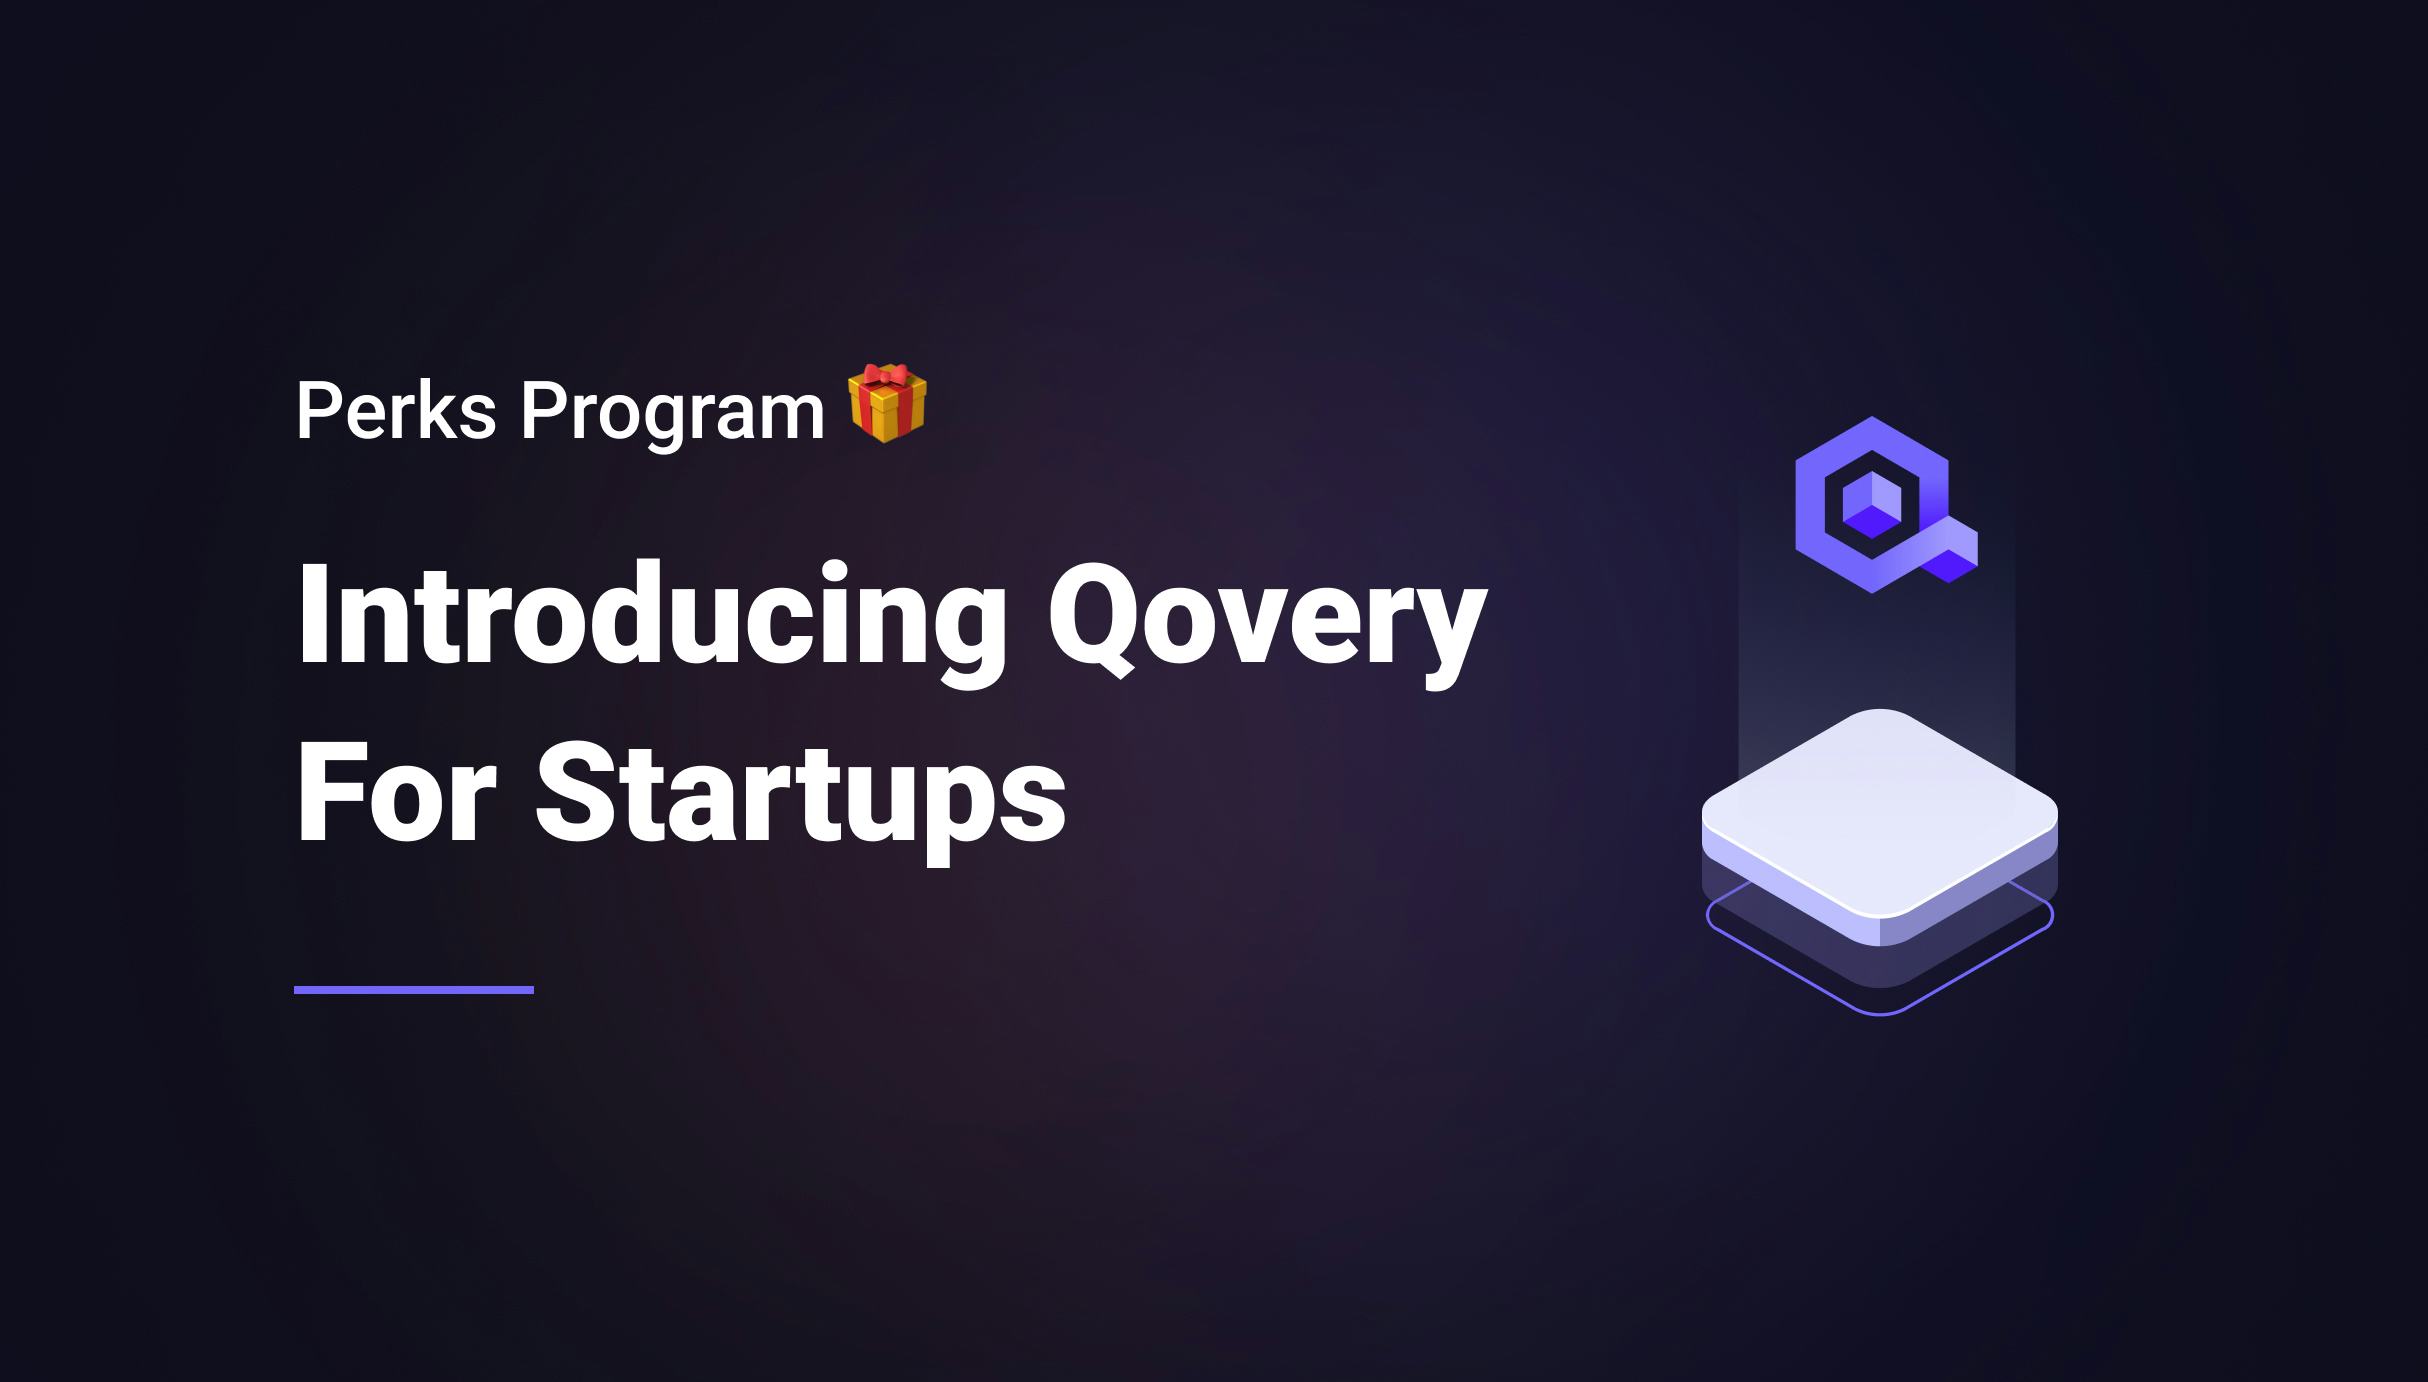 Introducing the Qovery Perks Program for Startups - Qovery